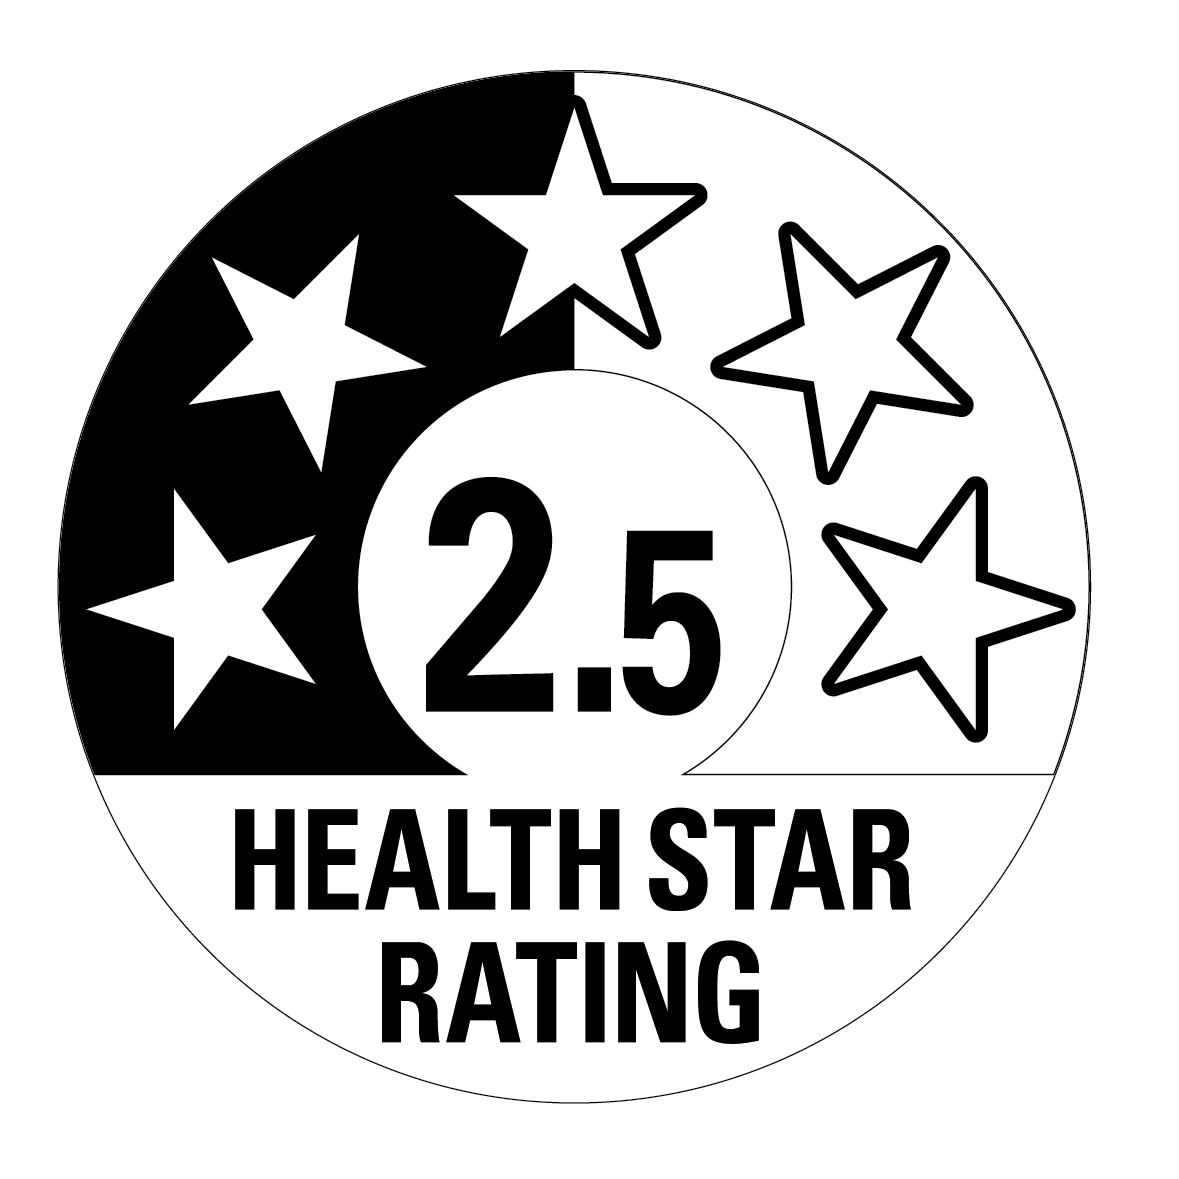 Health Star Rating displaying a 2.5 rating